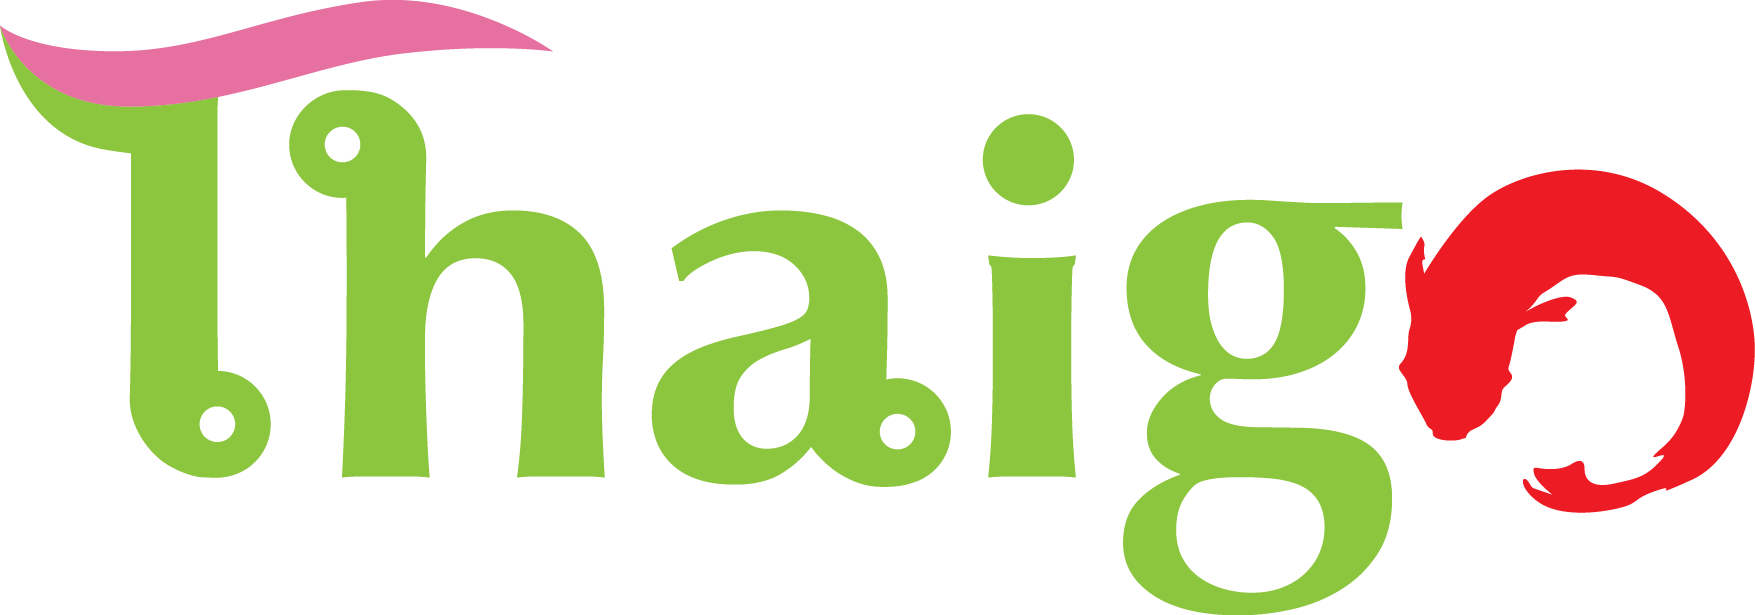 Thaigo logo